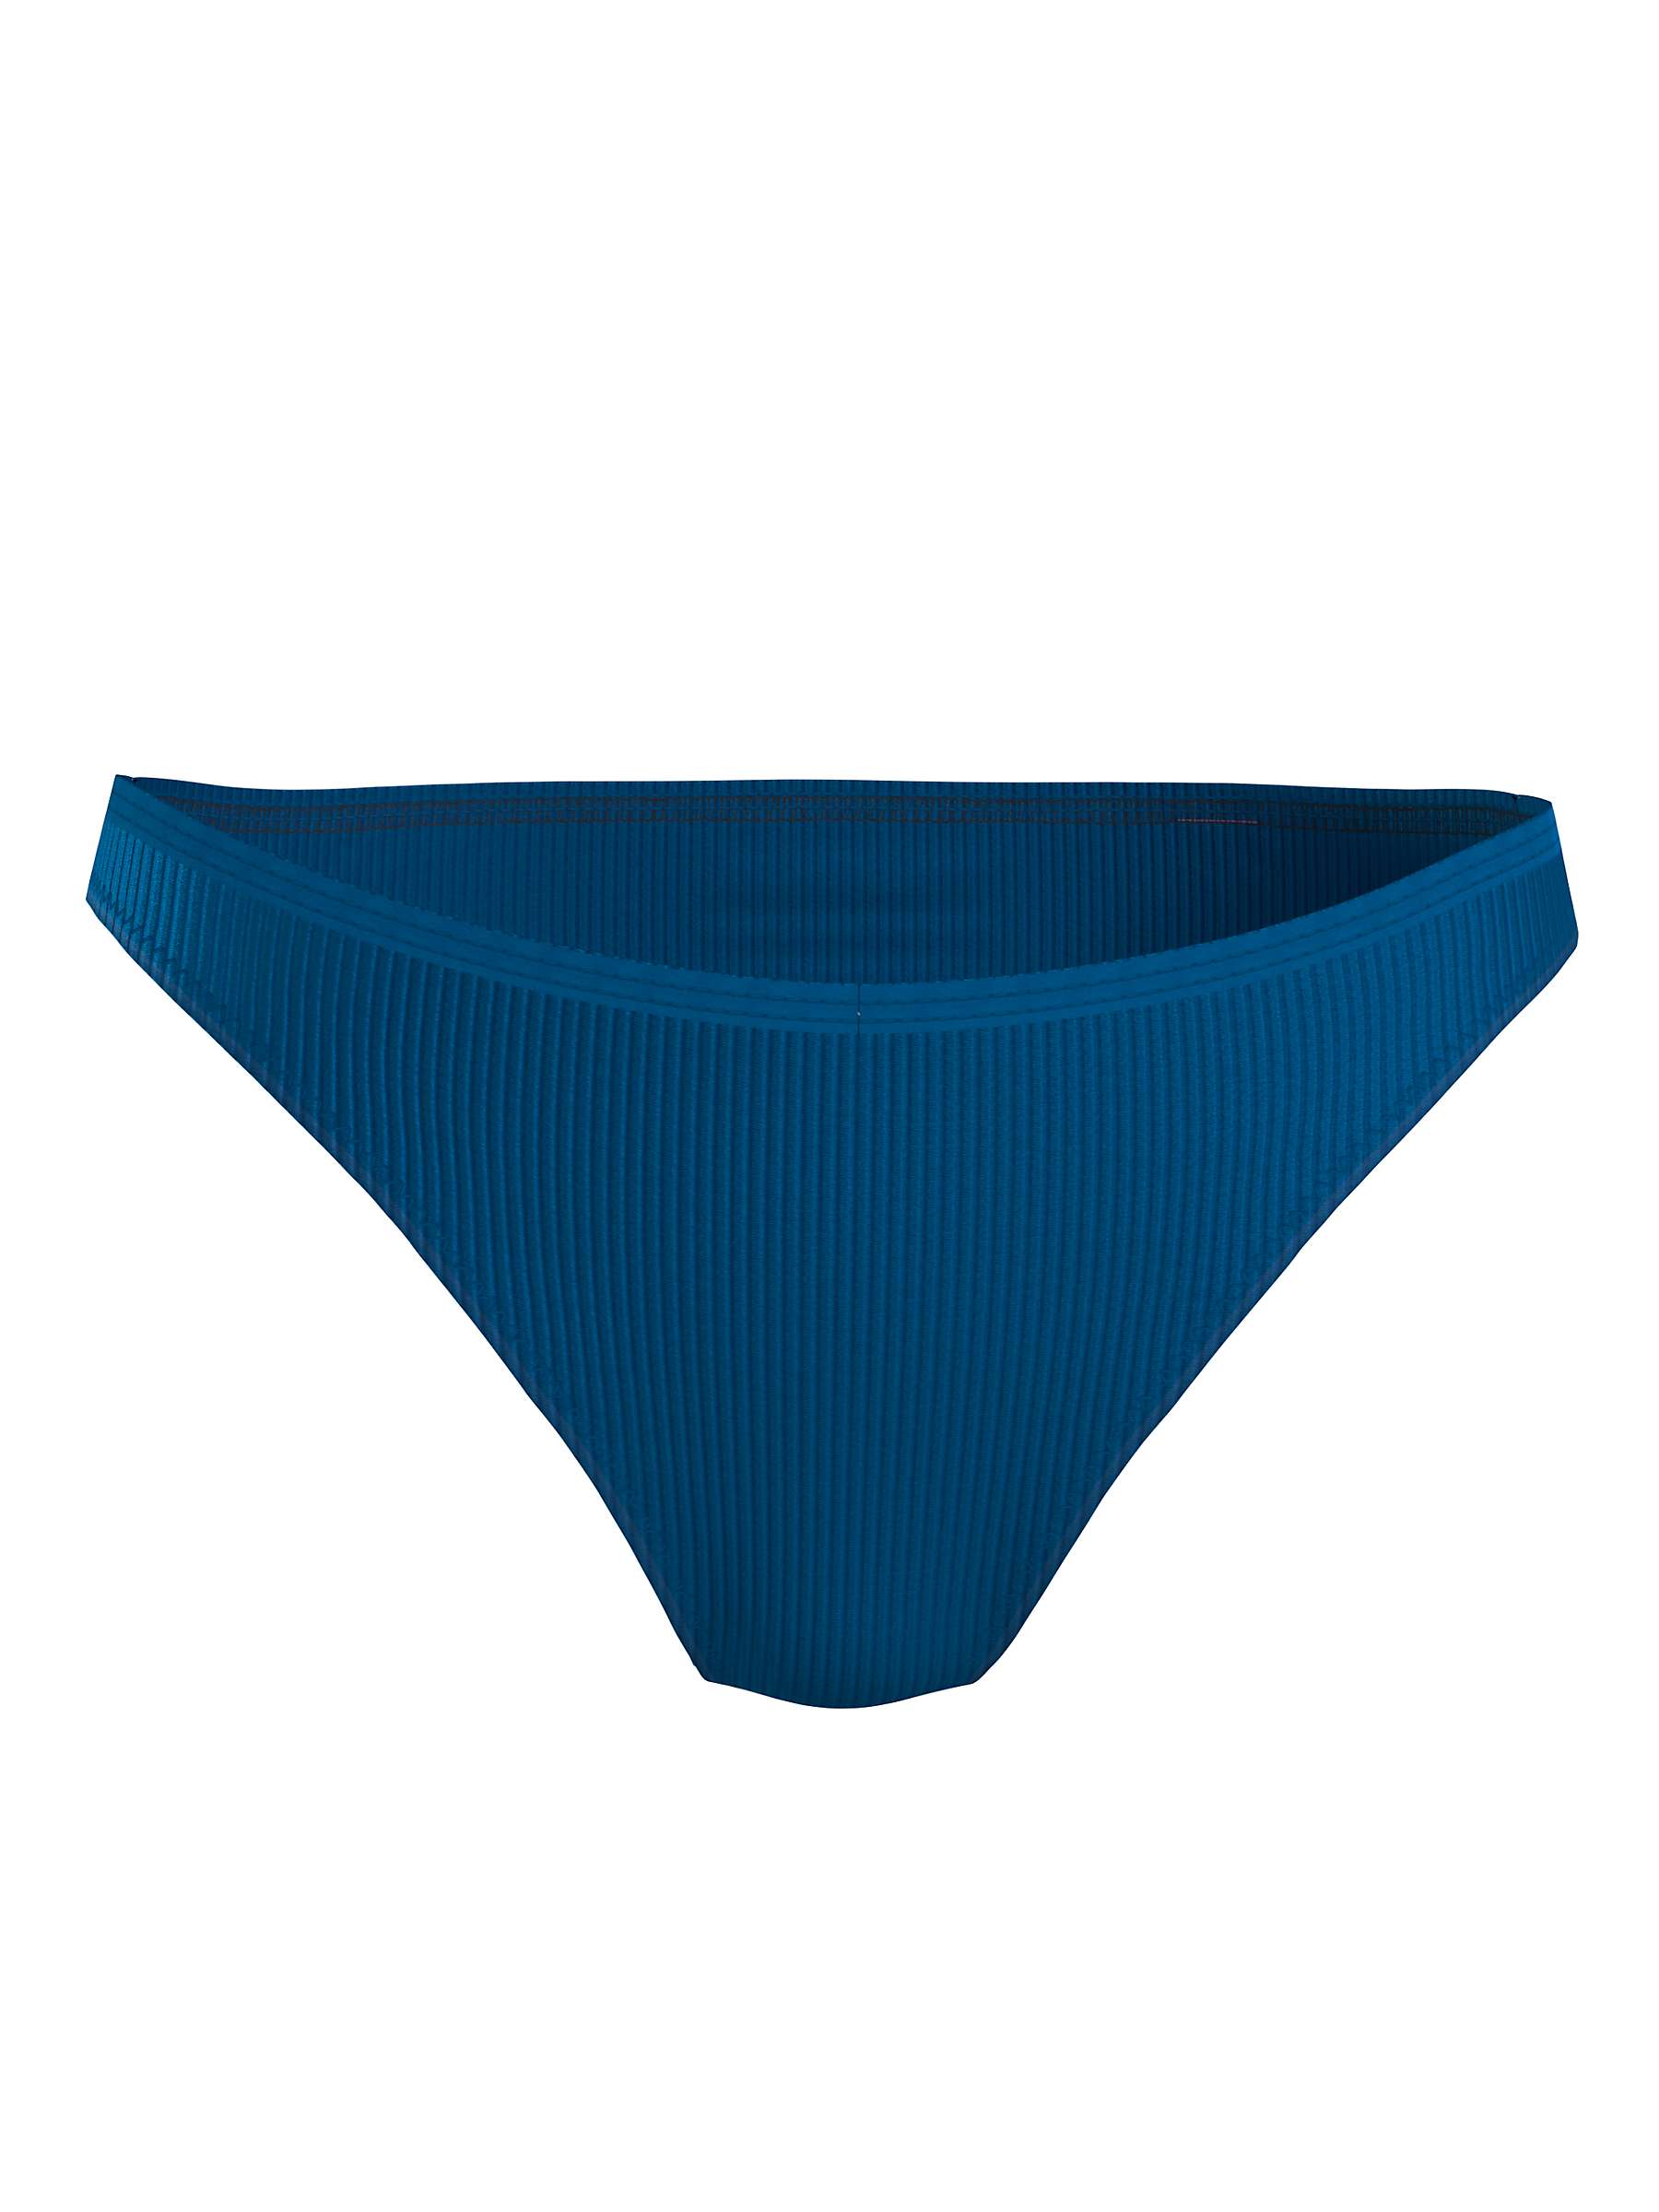 Buy Calvin Klein Rib Bikini Bottoms, Regatta Blue Online at johnlewis.com